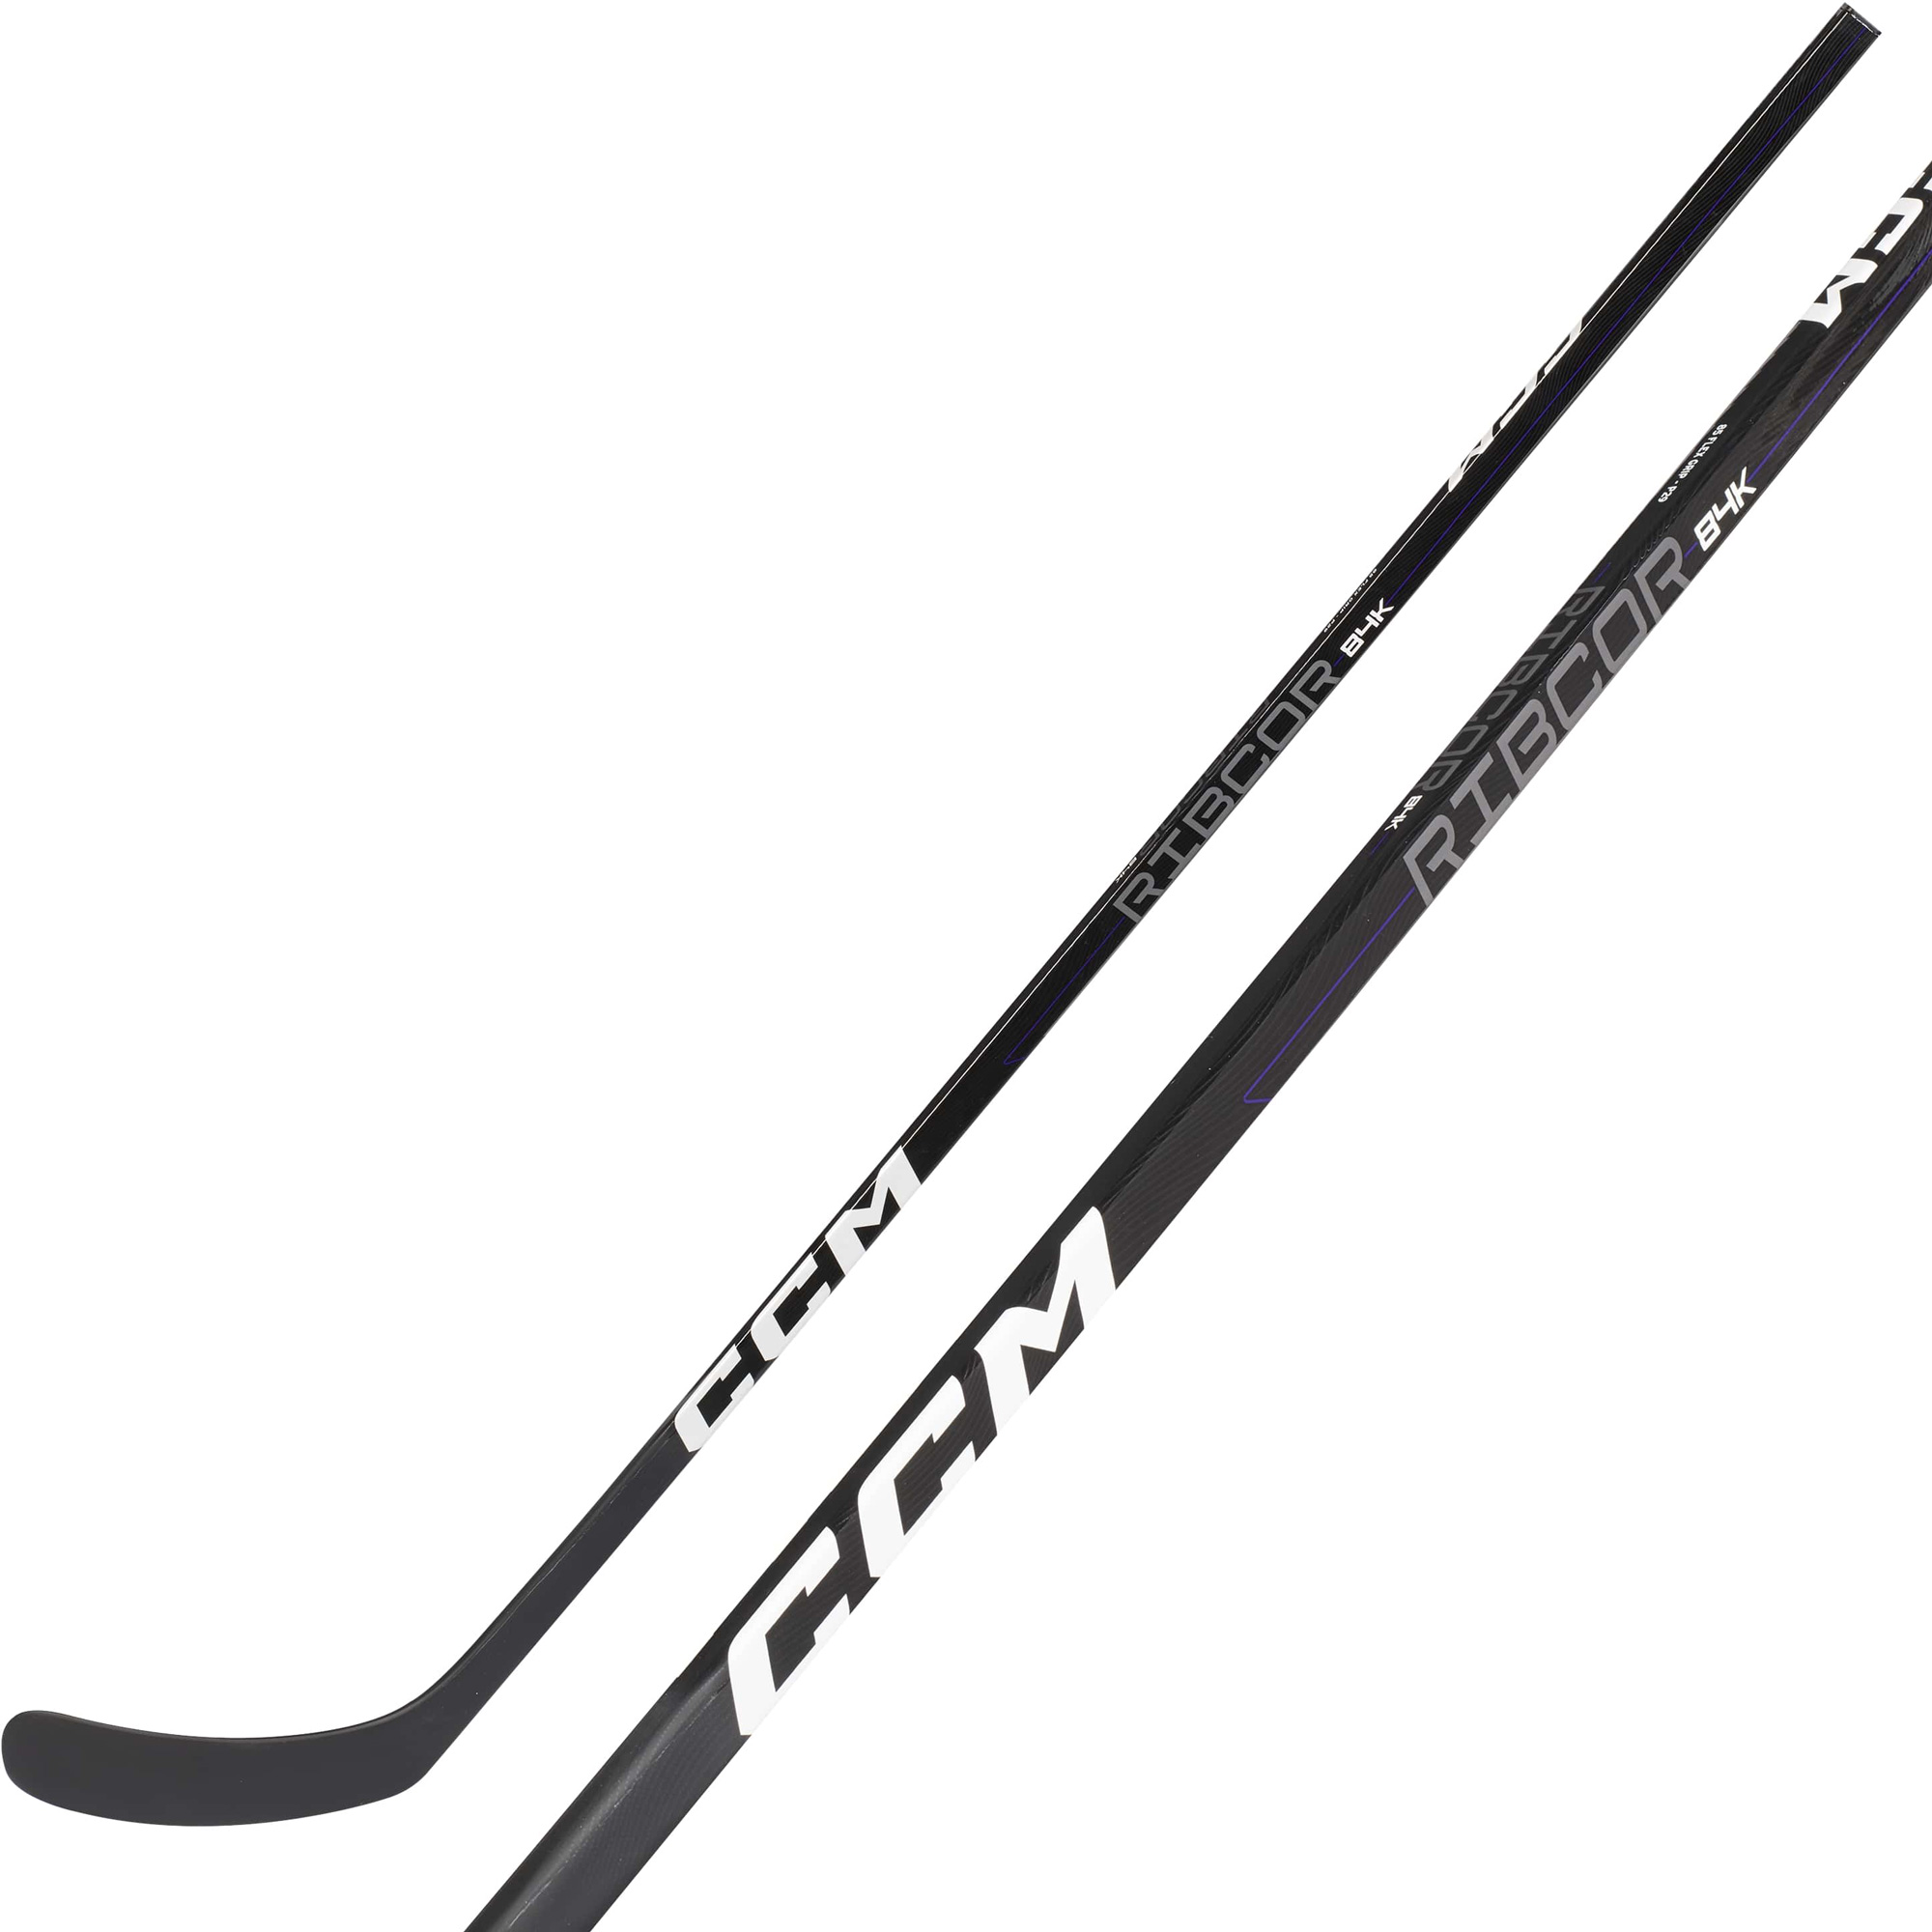 Ice hockey stick